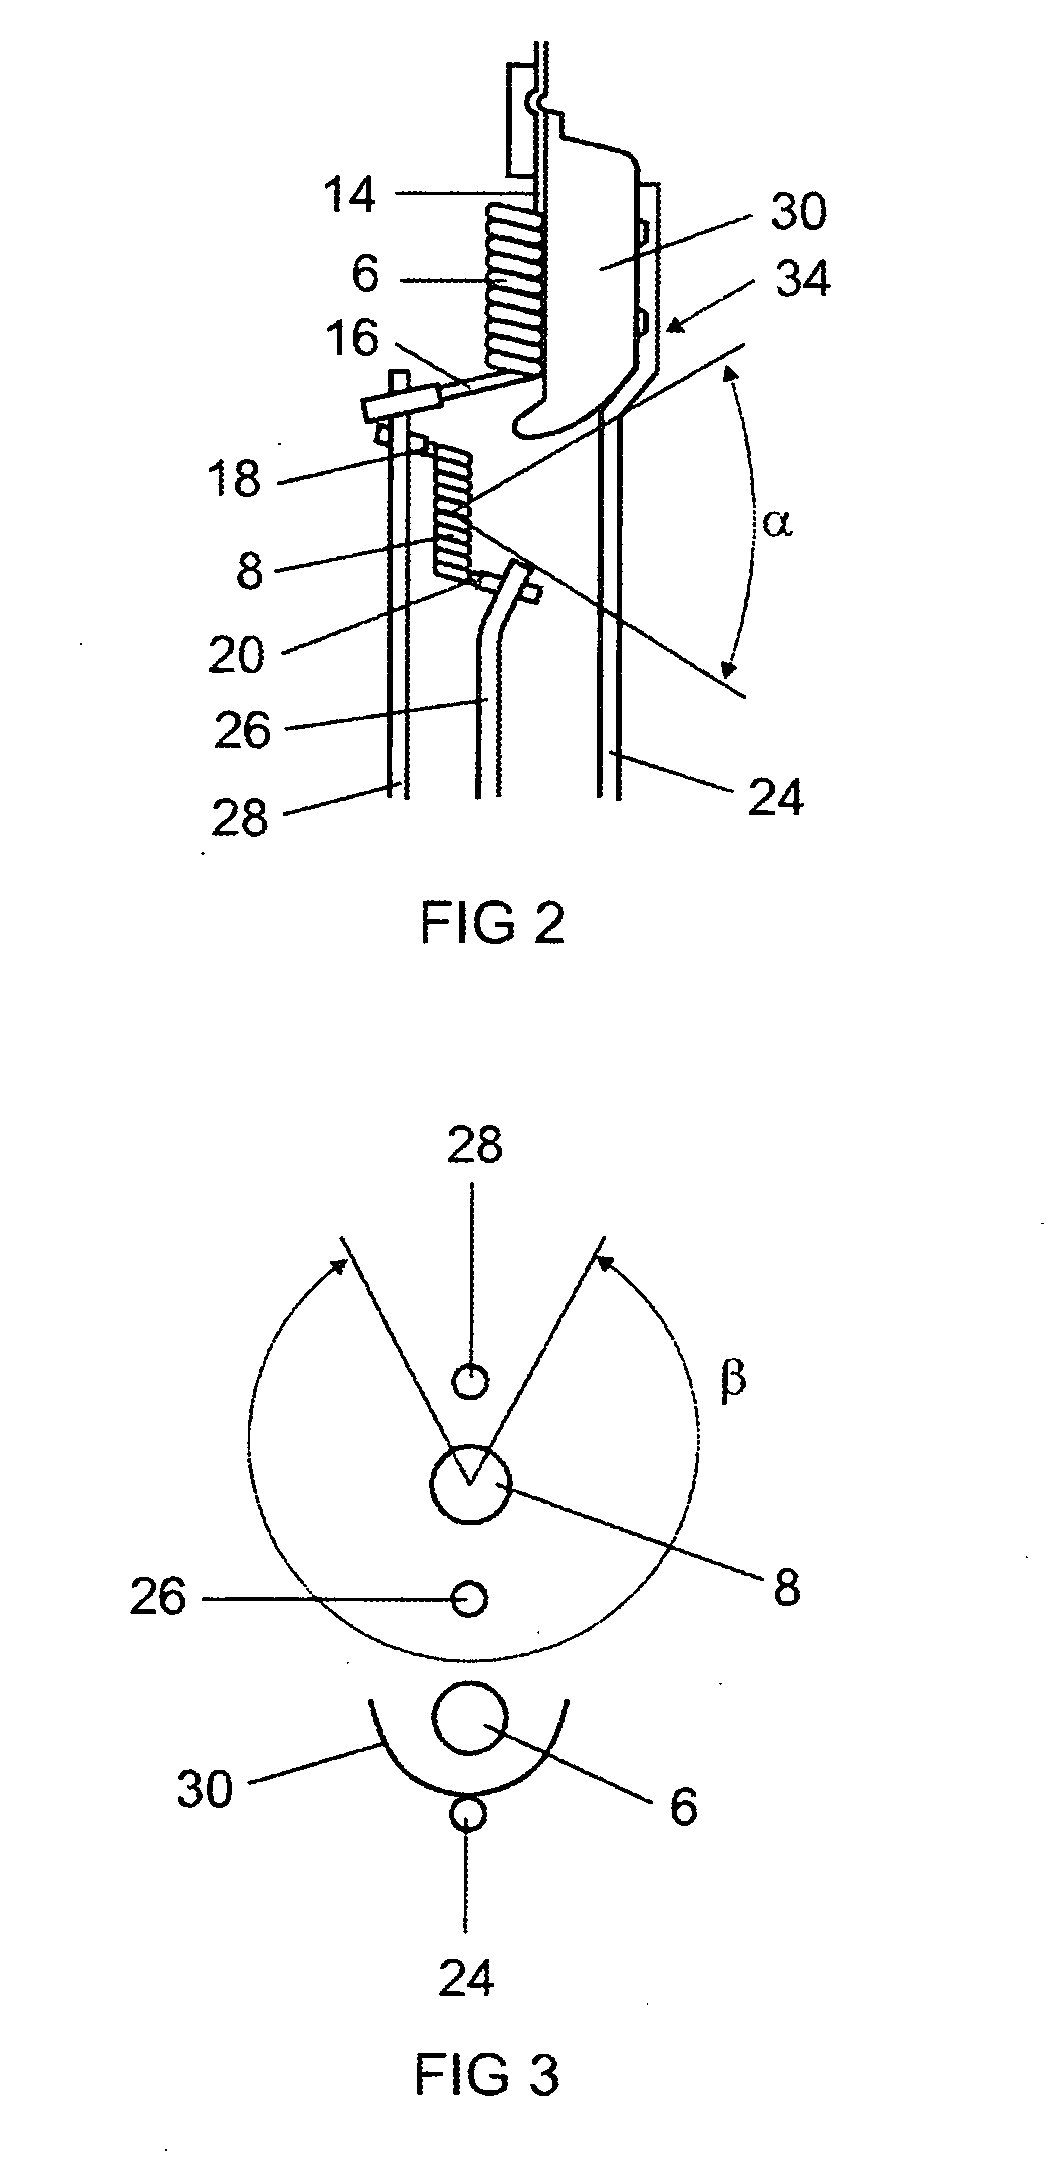 Two-filament lamp